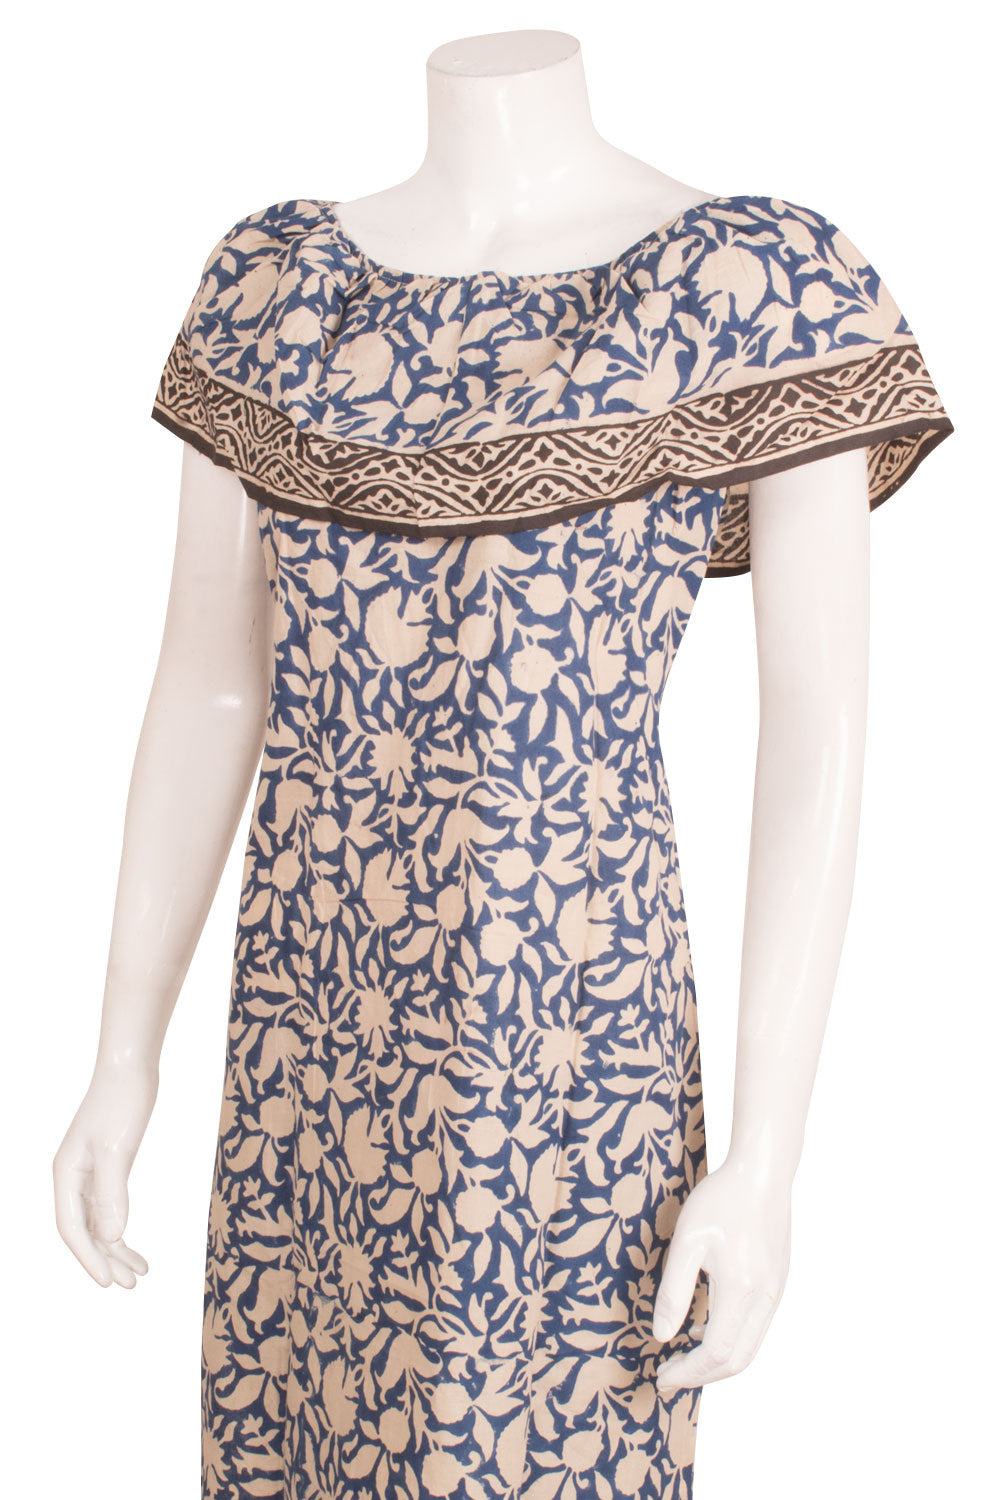 Bagh Printed Knee Length Cotton Dress with Umbrella Shoulder